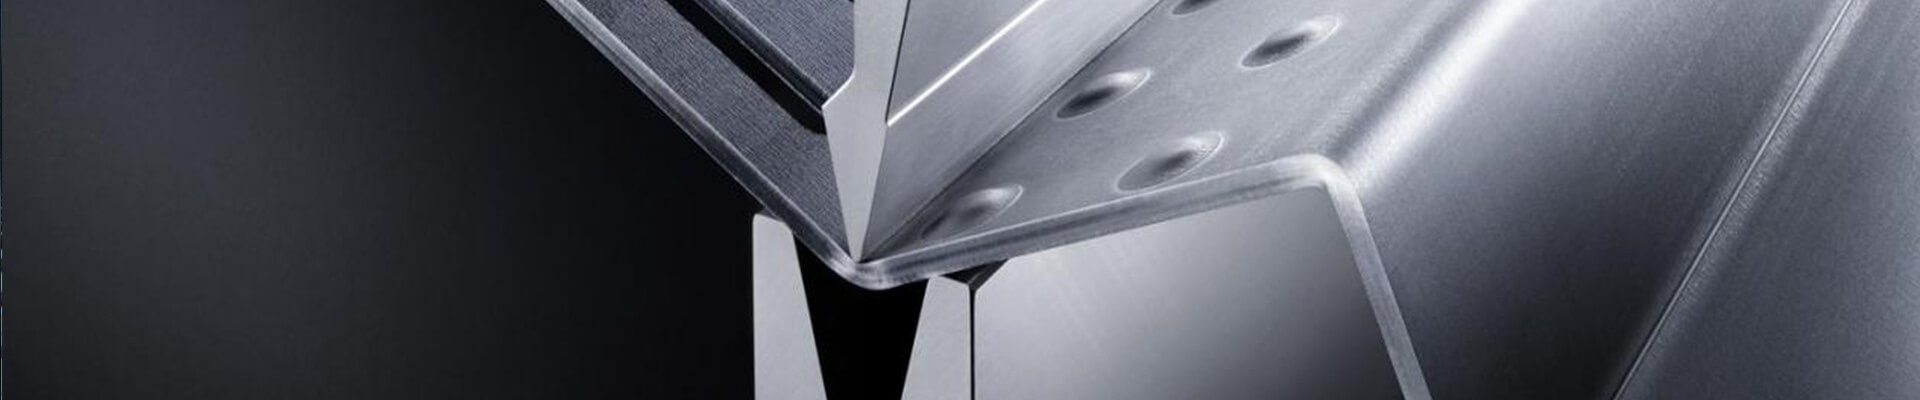 Sheet Metal Fabrication CNC Cutting Bending Tig Welding Mig Welding.